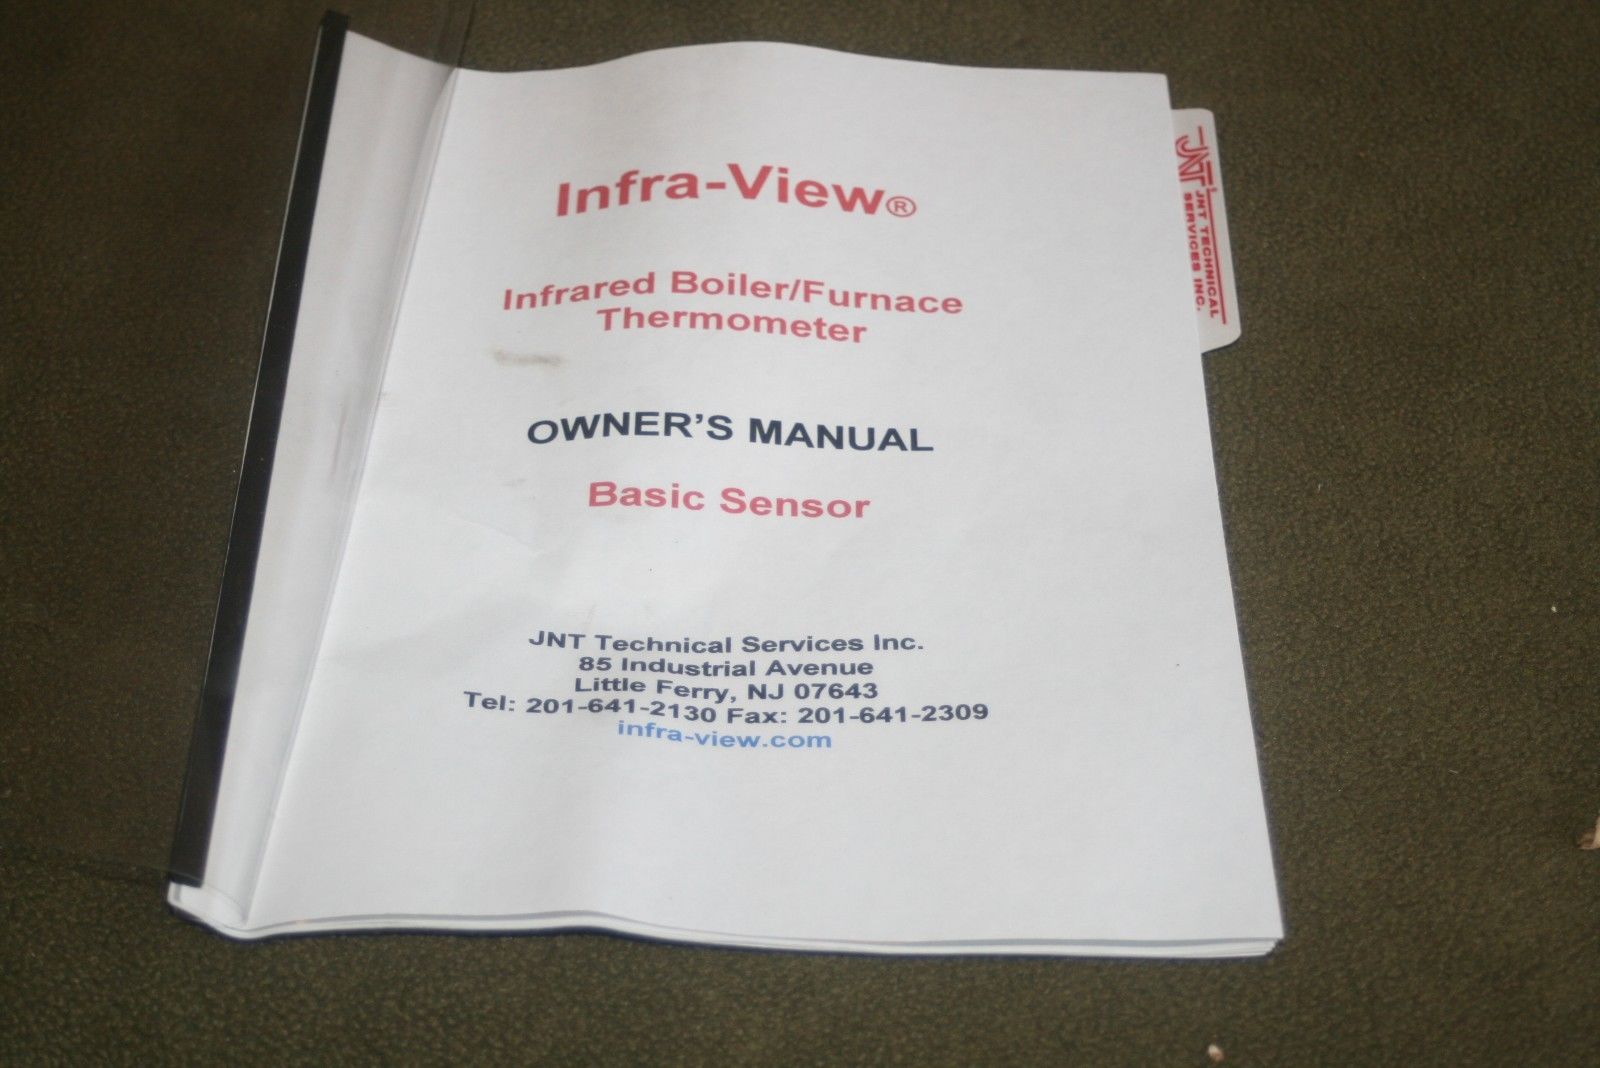 Infra-View / Infrared Boiler Furnace Thermometer Smart Sensor